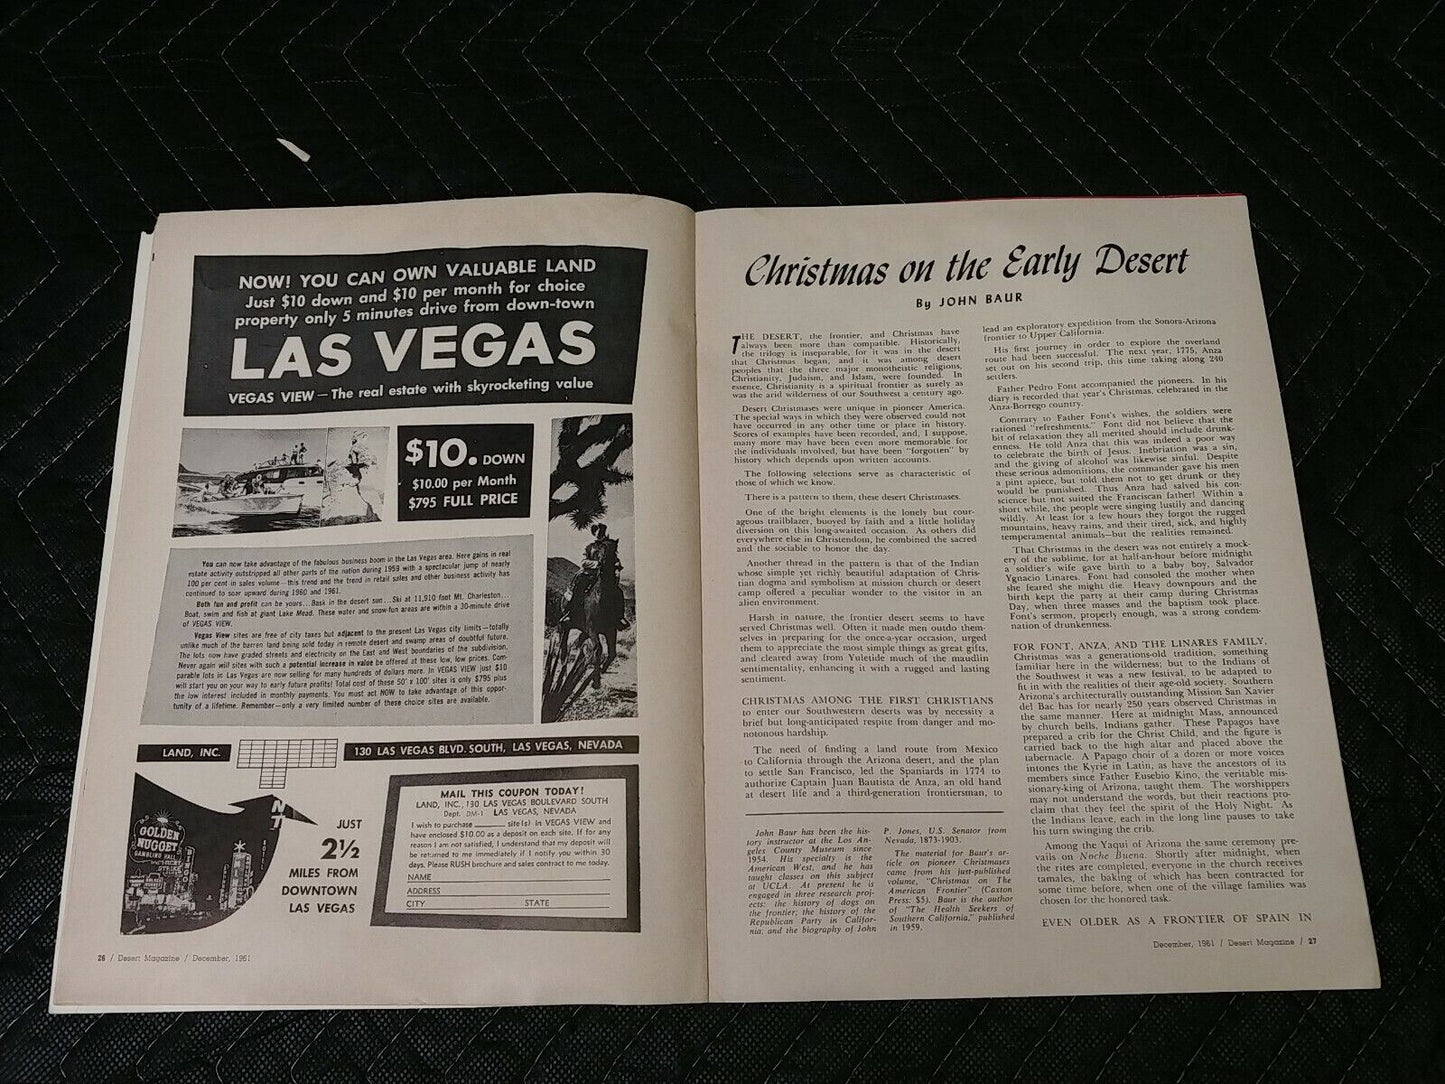 Vintage Desert Magazine December 1961